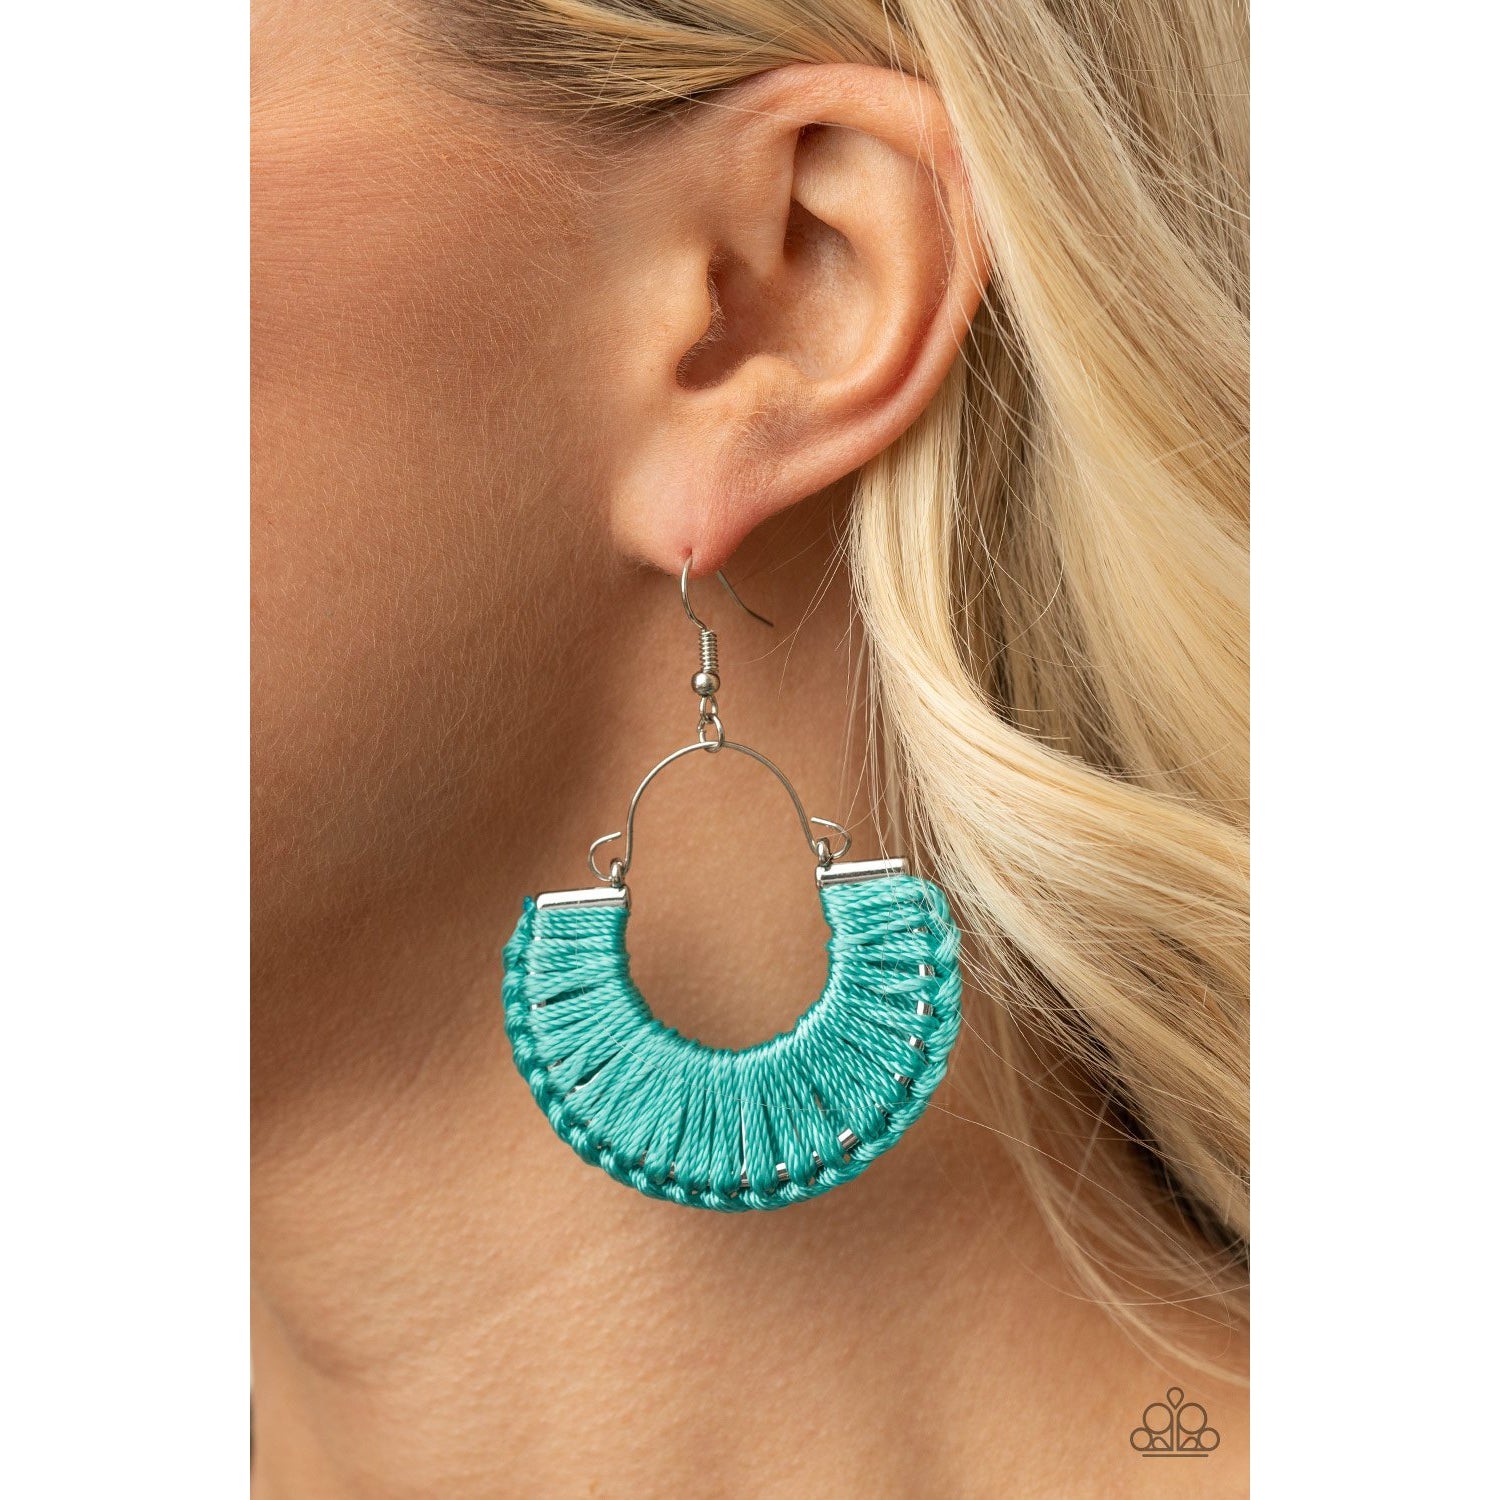 Threadbare Beauty - Blue Earrings - Paparazzi Accessories - GlaMarous Titi Jewels